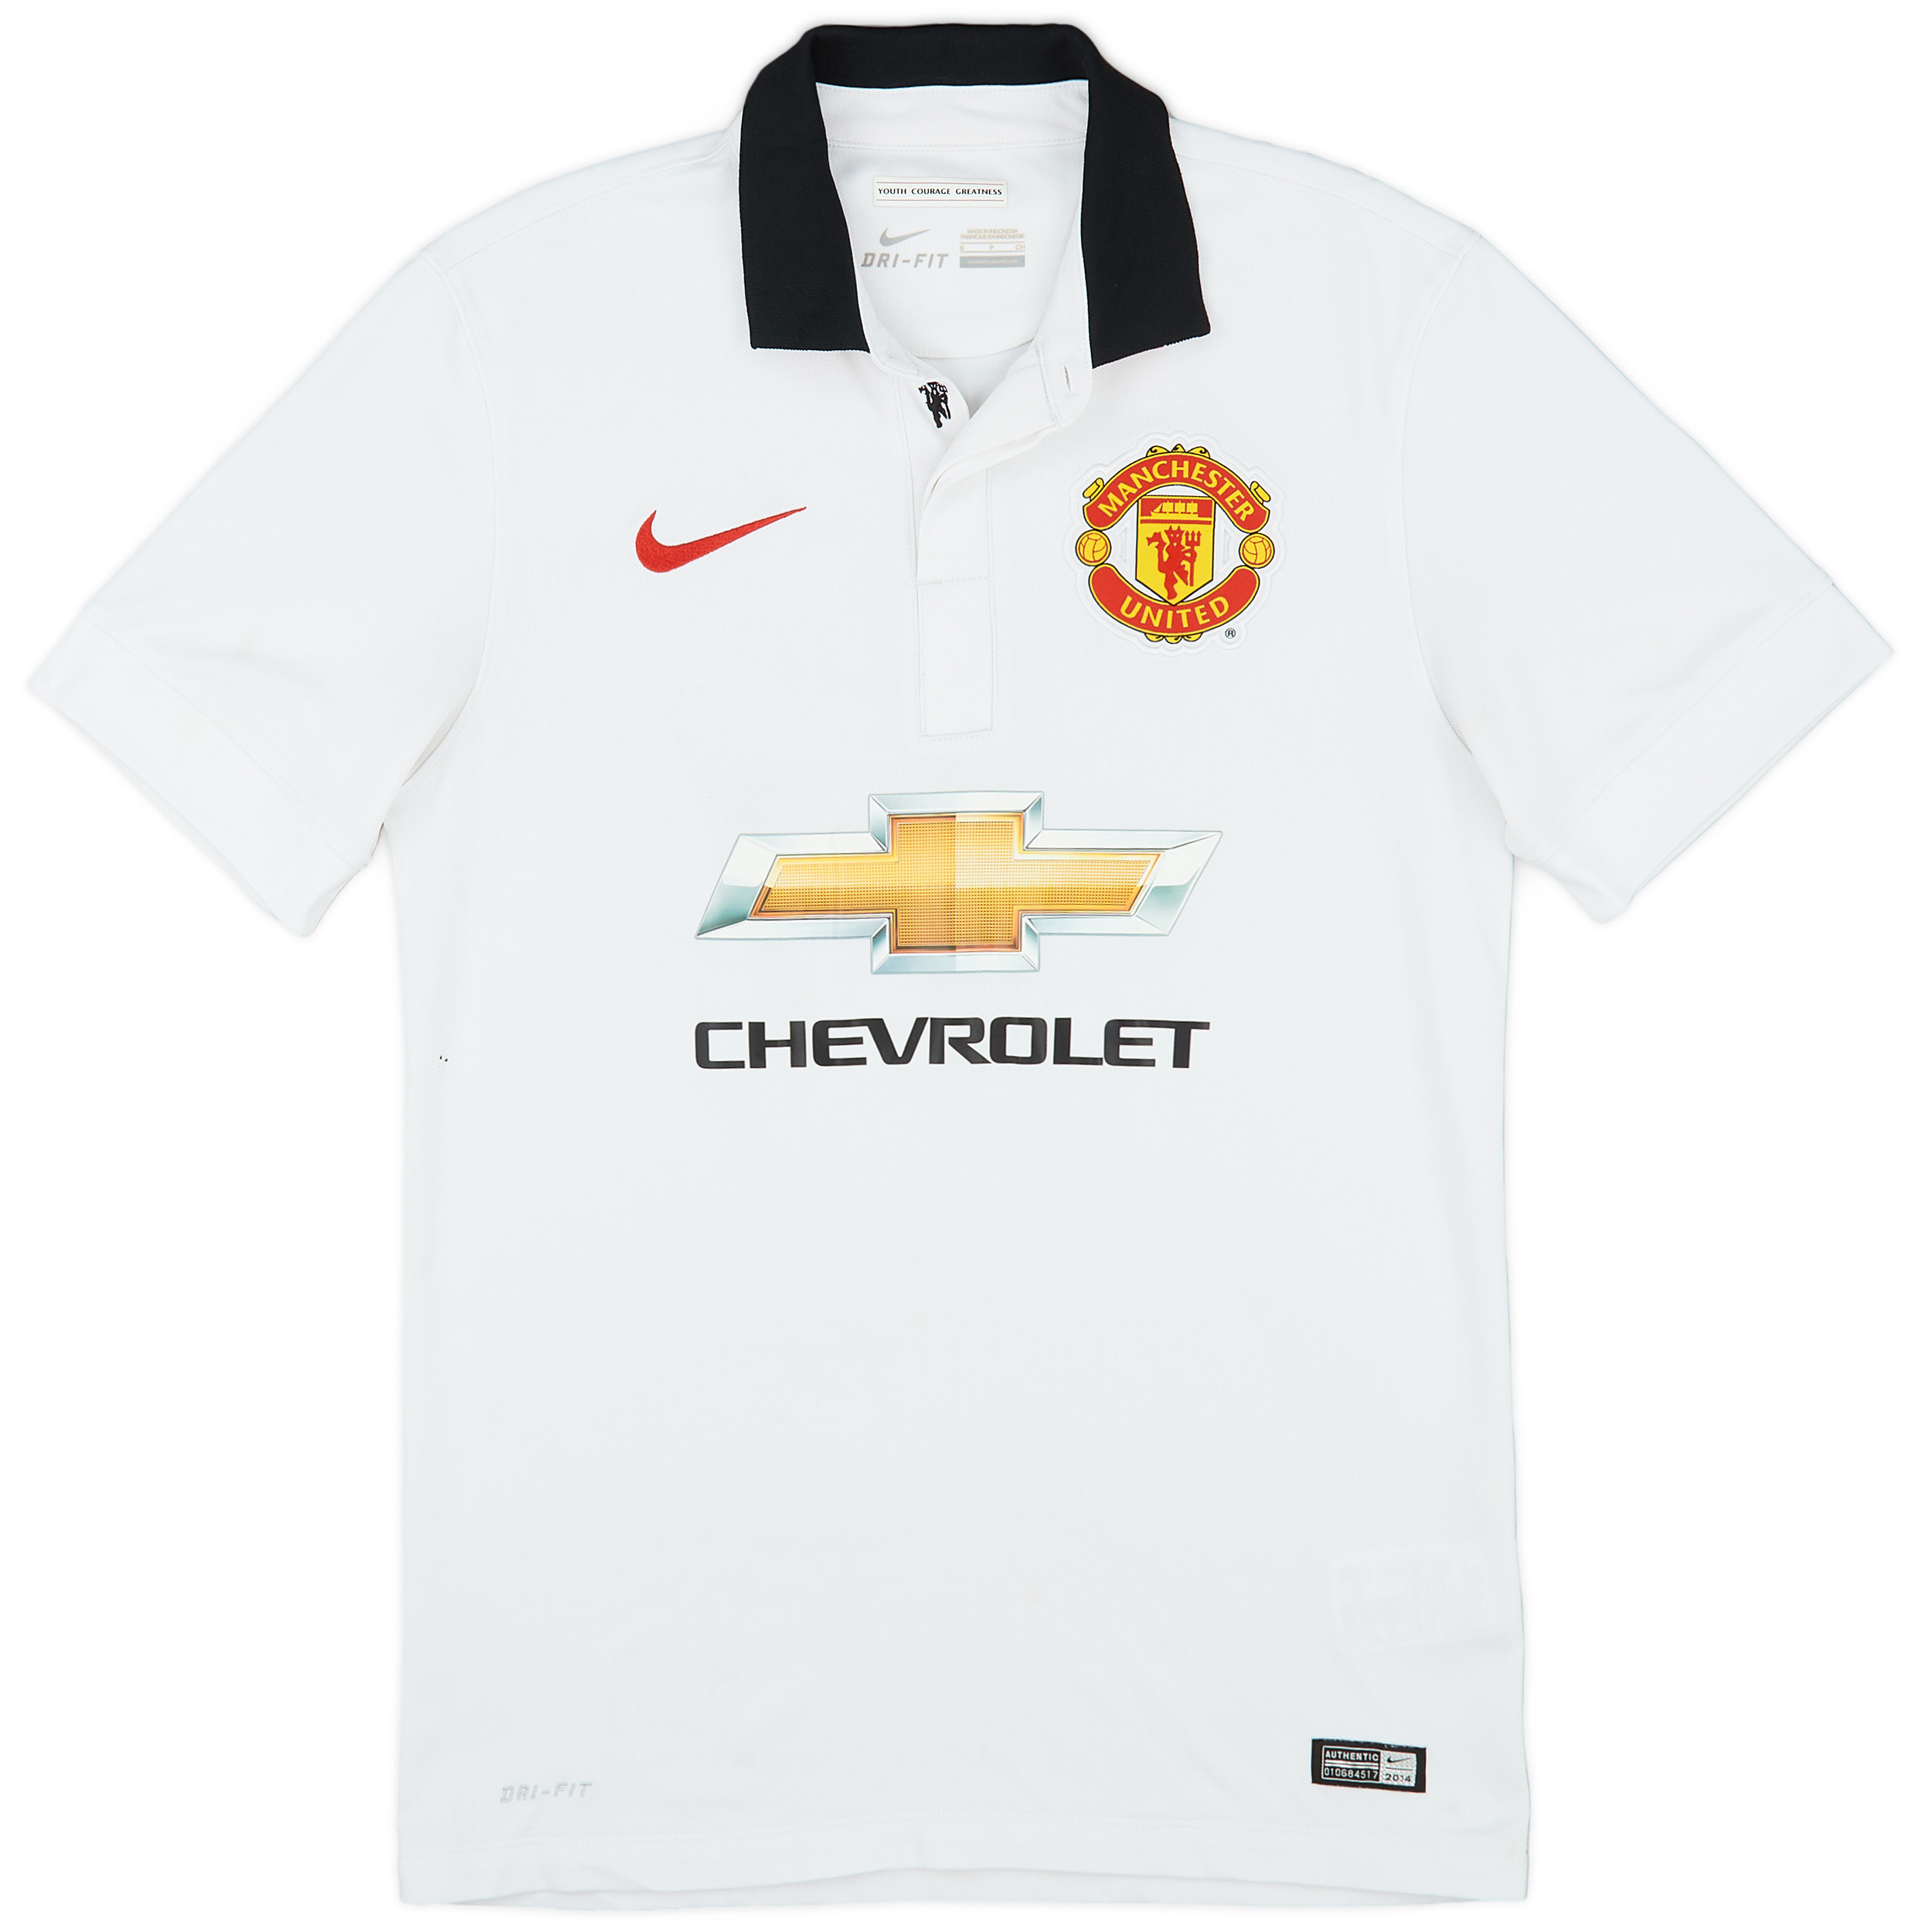 2014-15 Manchester United Away Shirt - 9/10 - ()